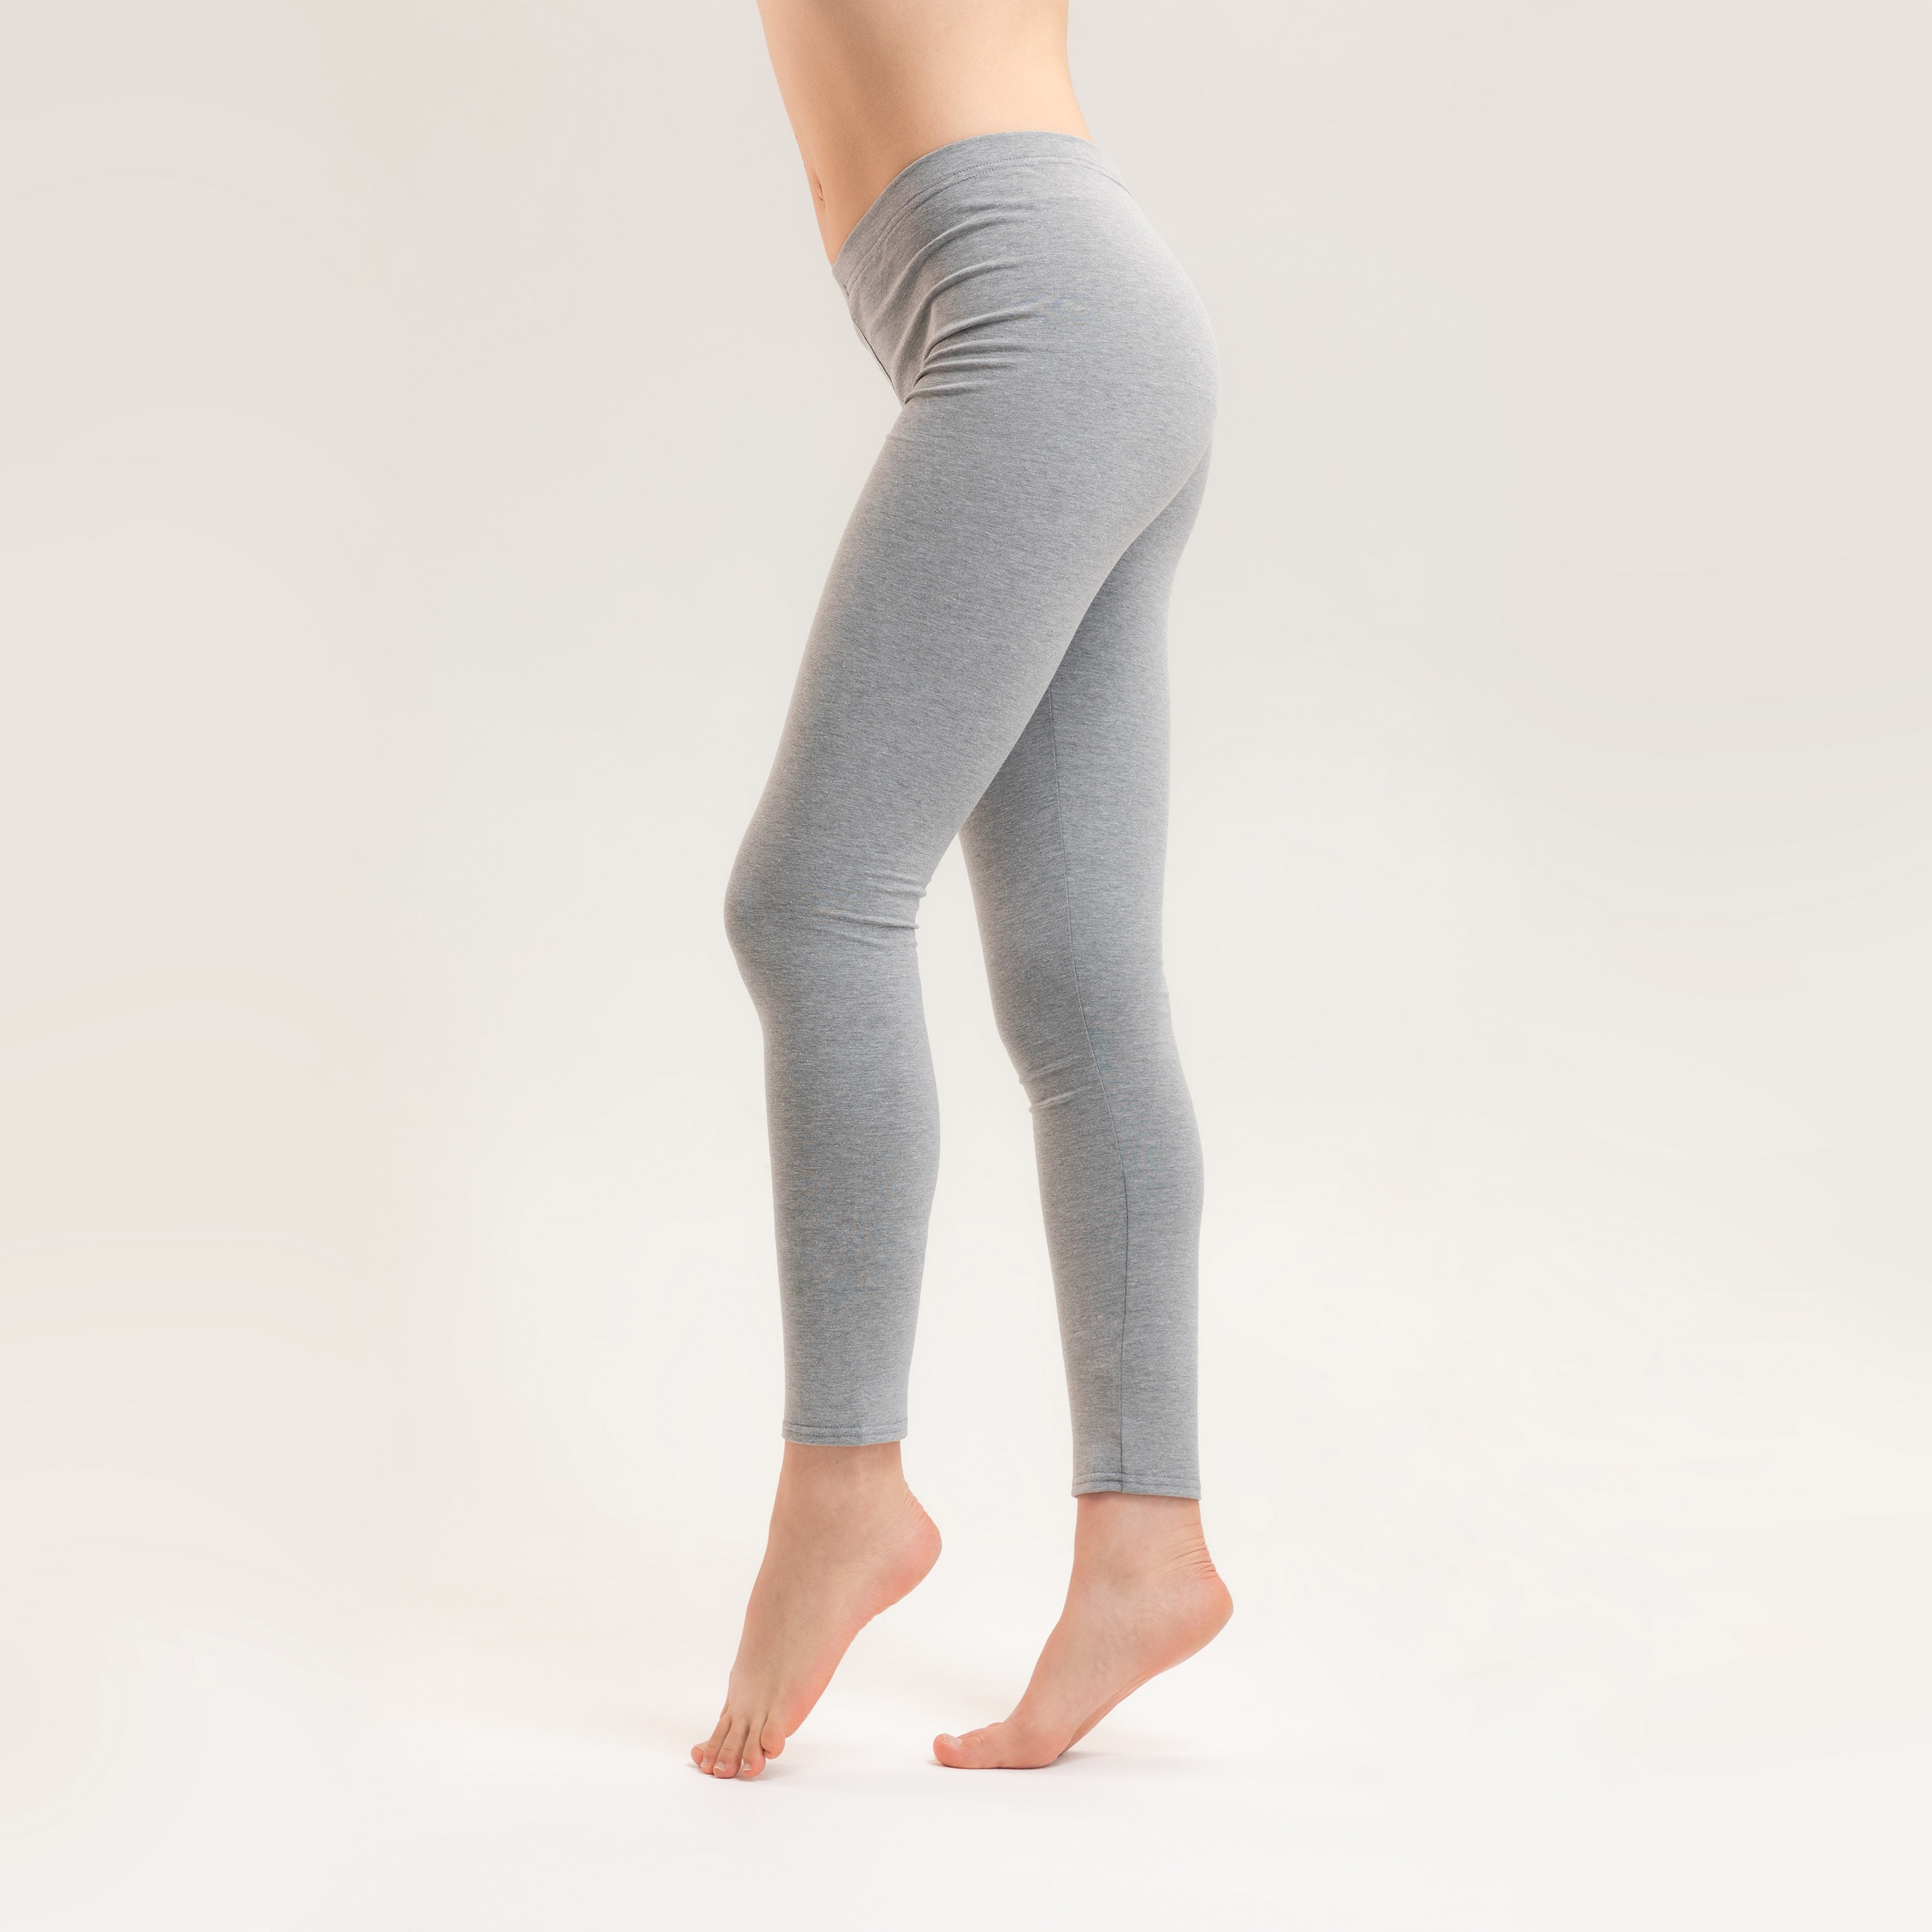 Light Grey Solid Yoga Leggings, Pastel Gray Color Women's Long